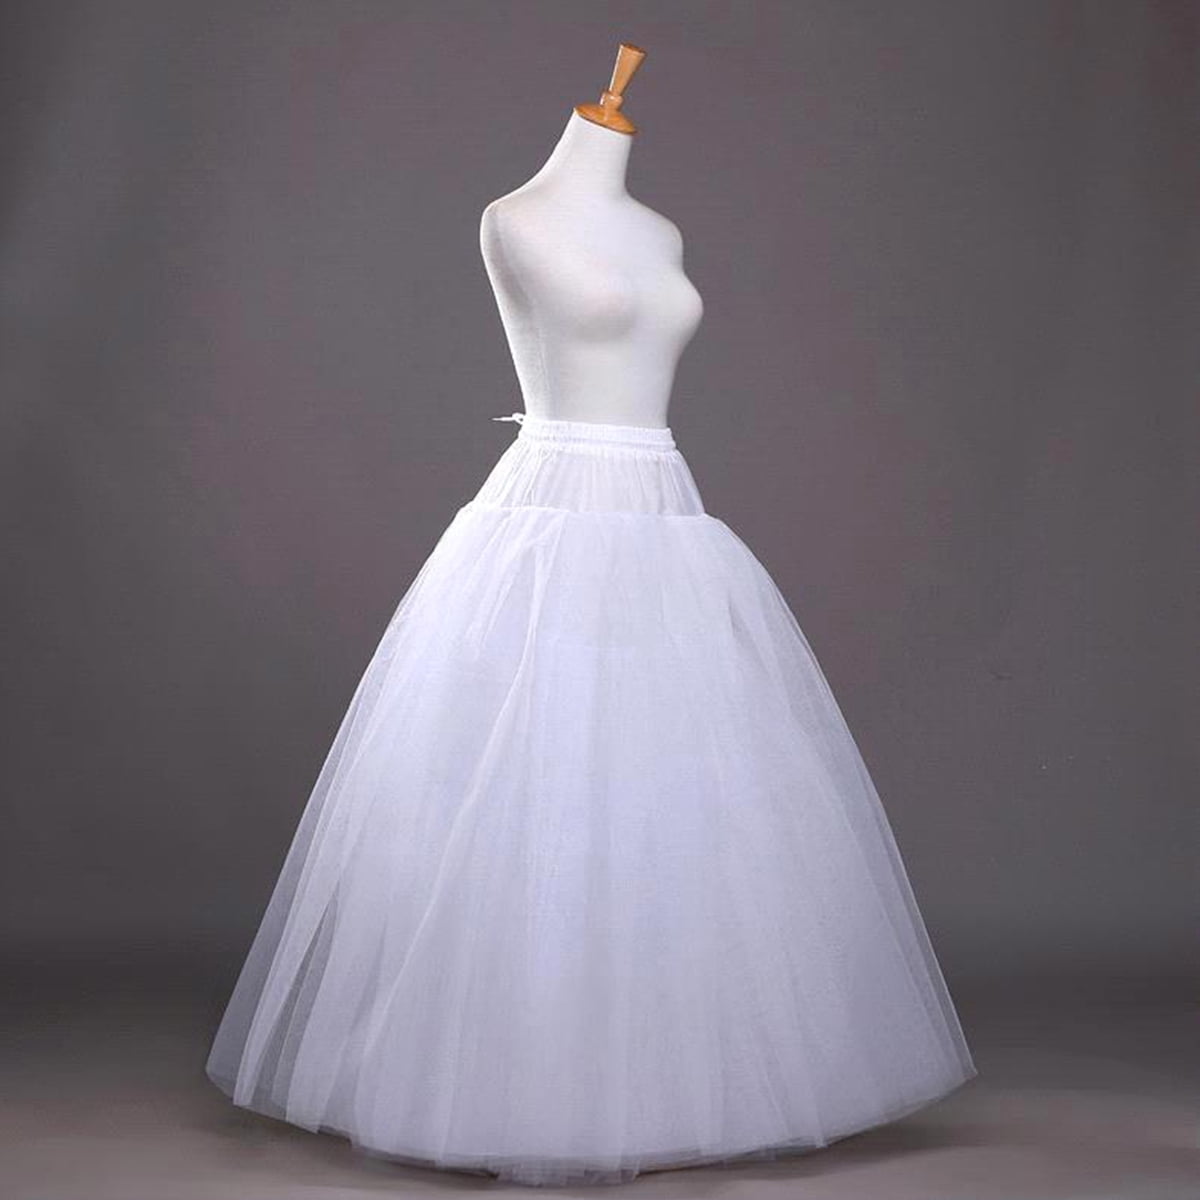 Flora 3 Hoop Bridal Wedding Petticoat/Prom Underskirt,Size S-XL